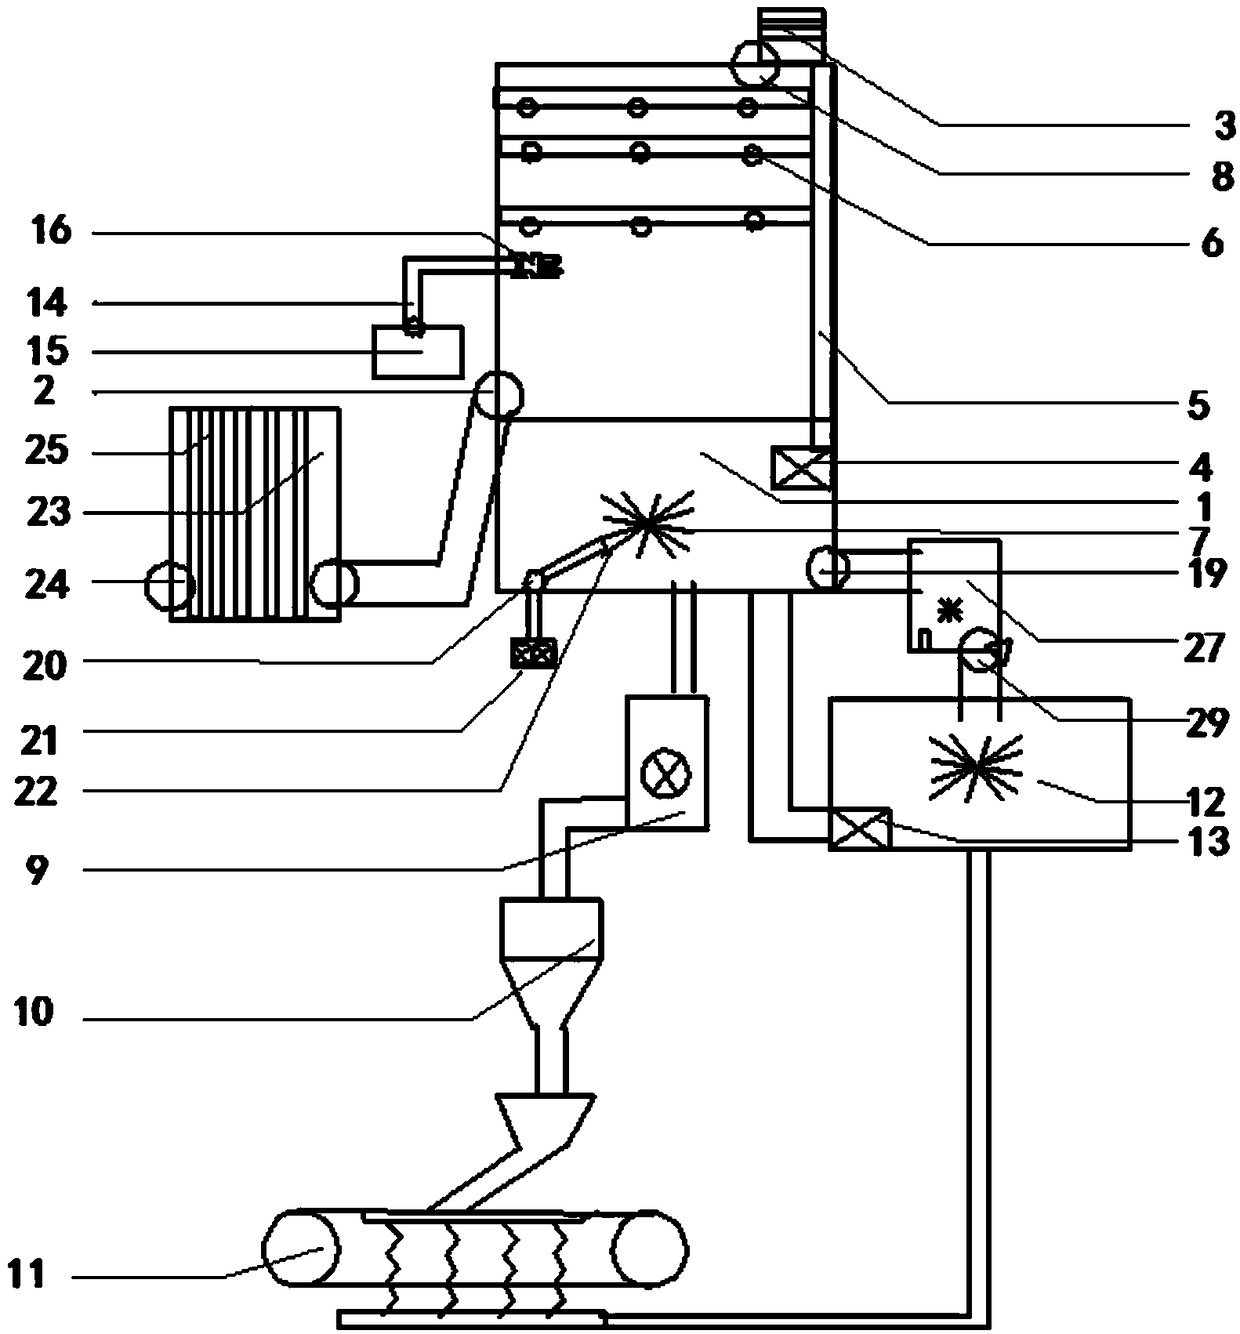 Flue gas desulfurization system